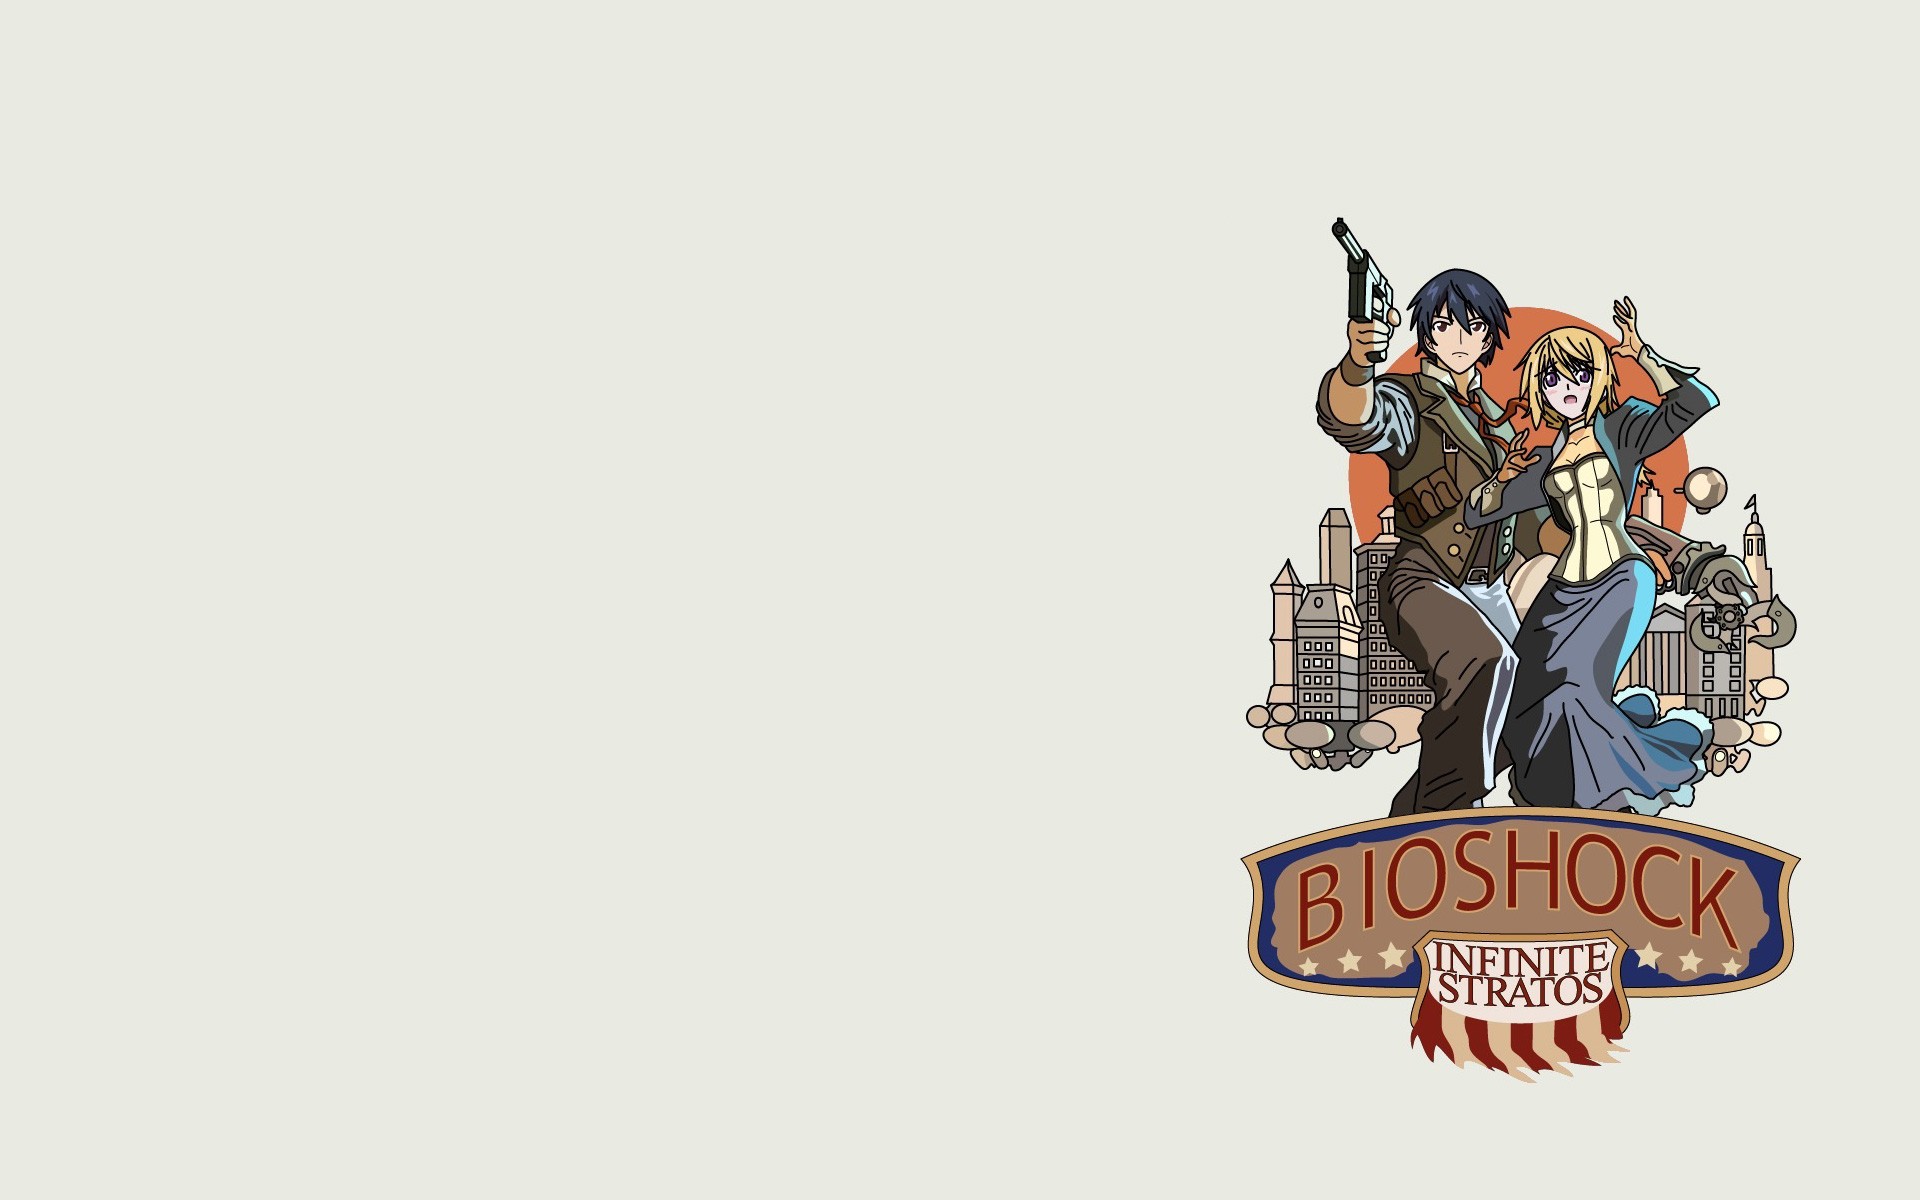 Bioshock Infinite Stratos Anime Wallpaper Background